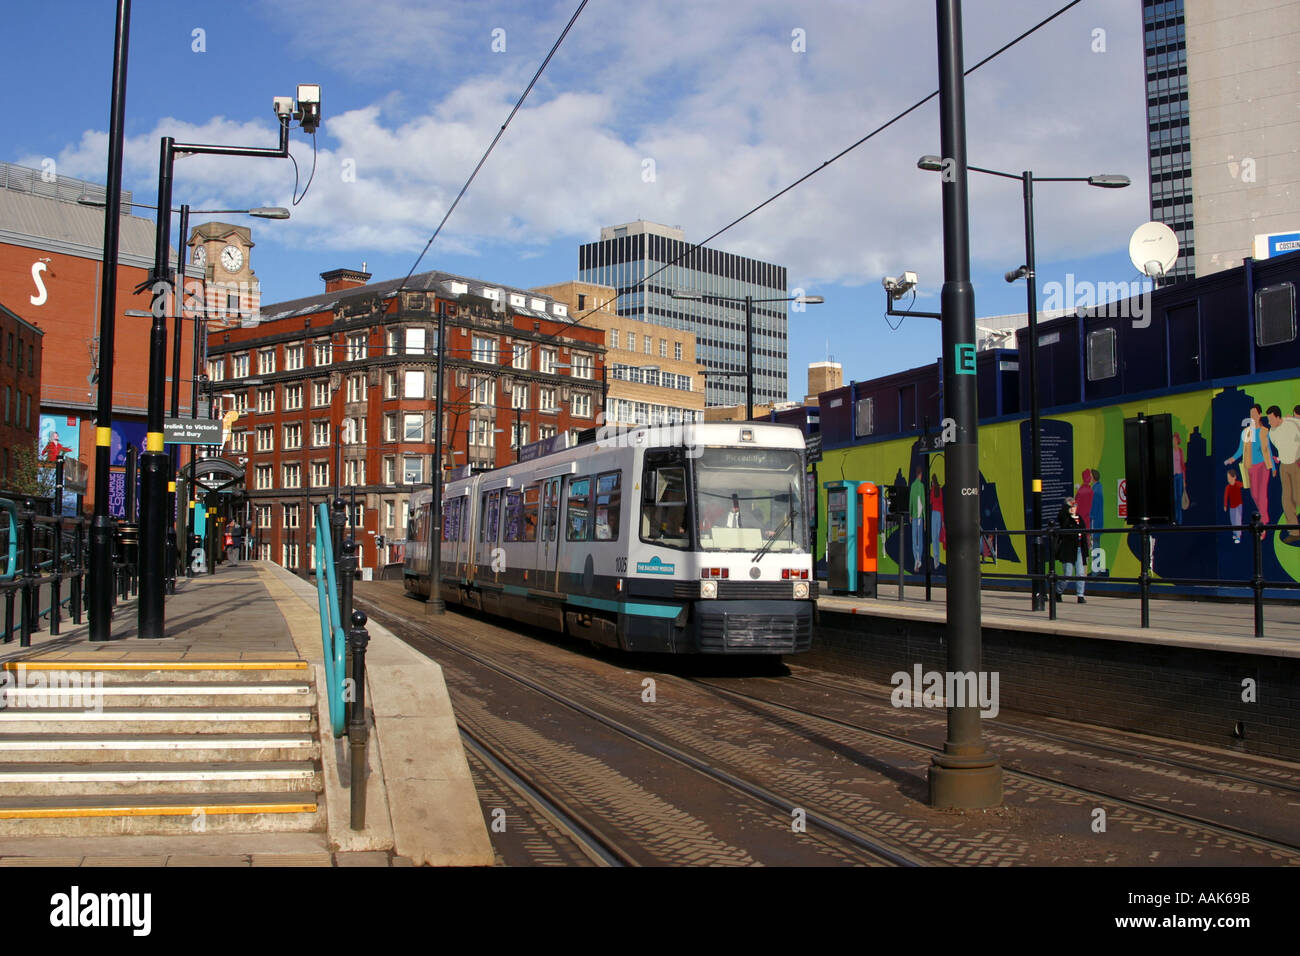 Tram at Shudehill Manchester UK Stock Photo